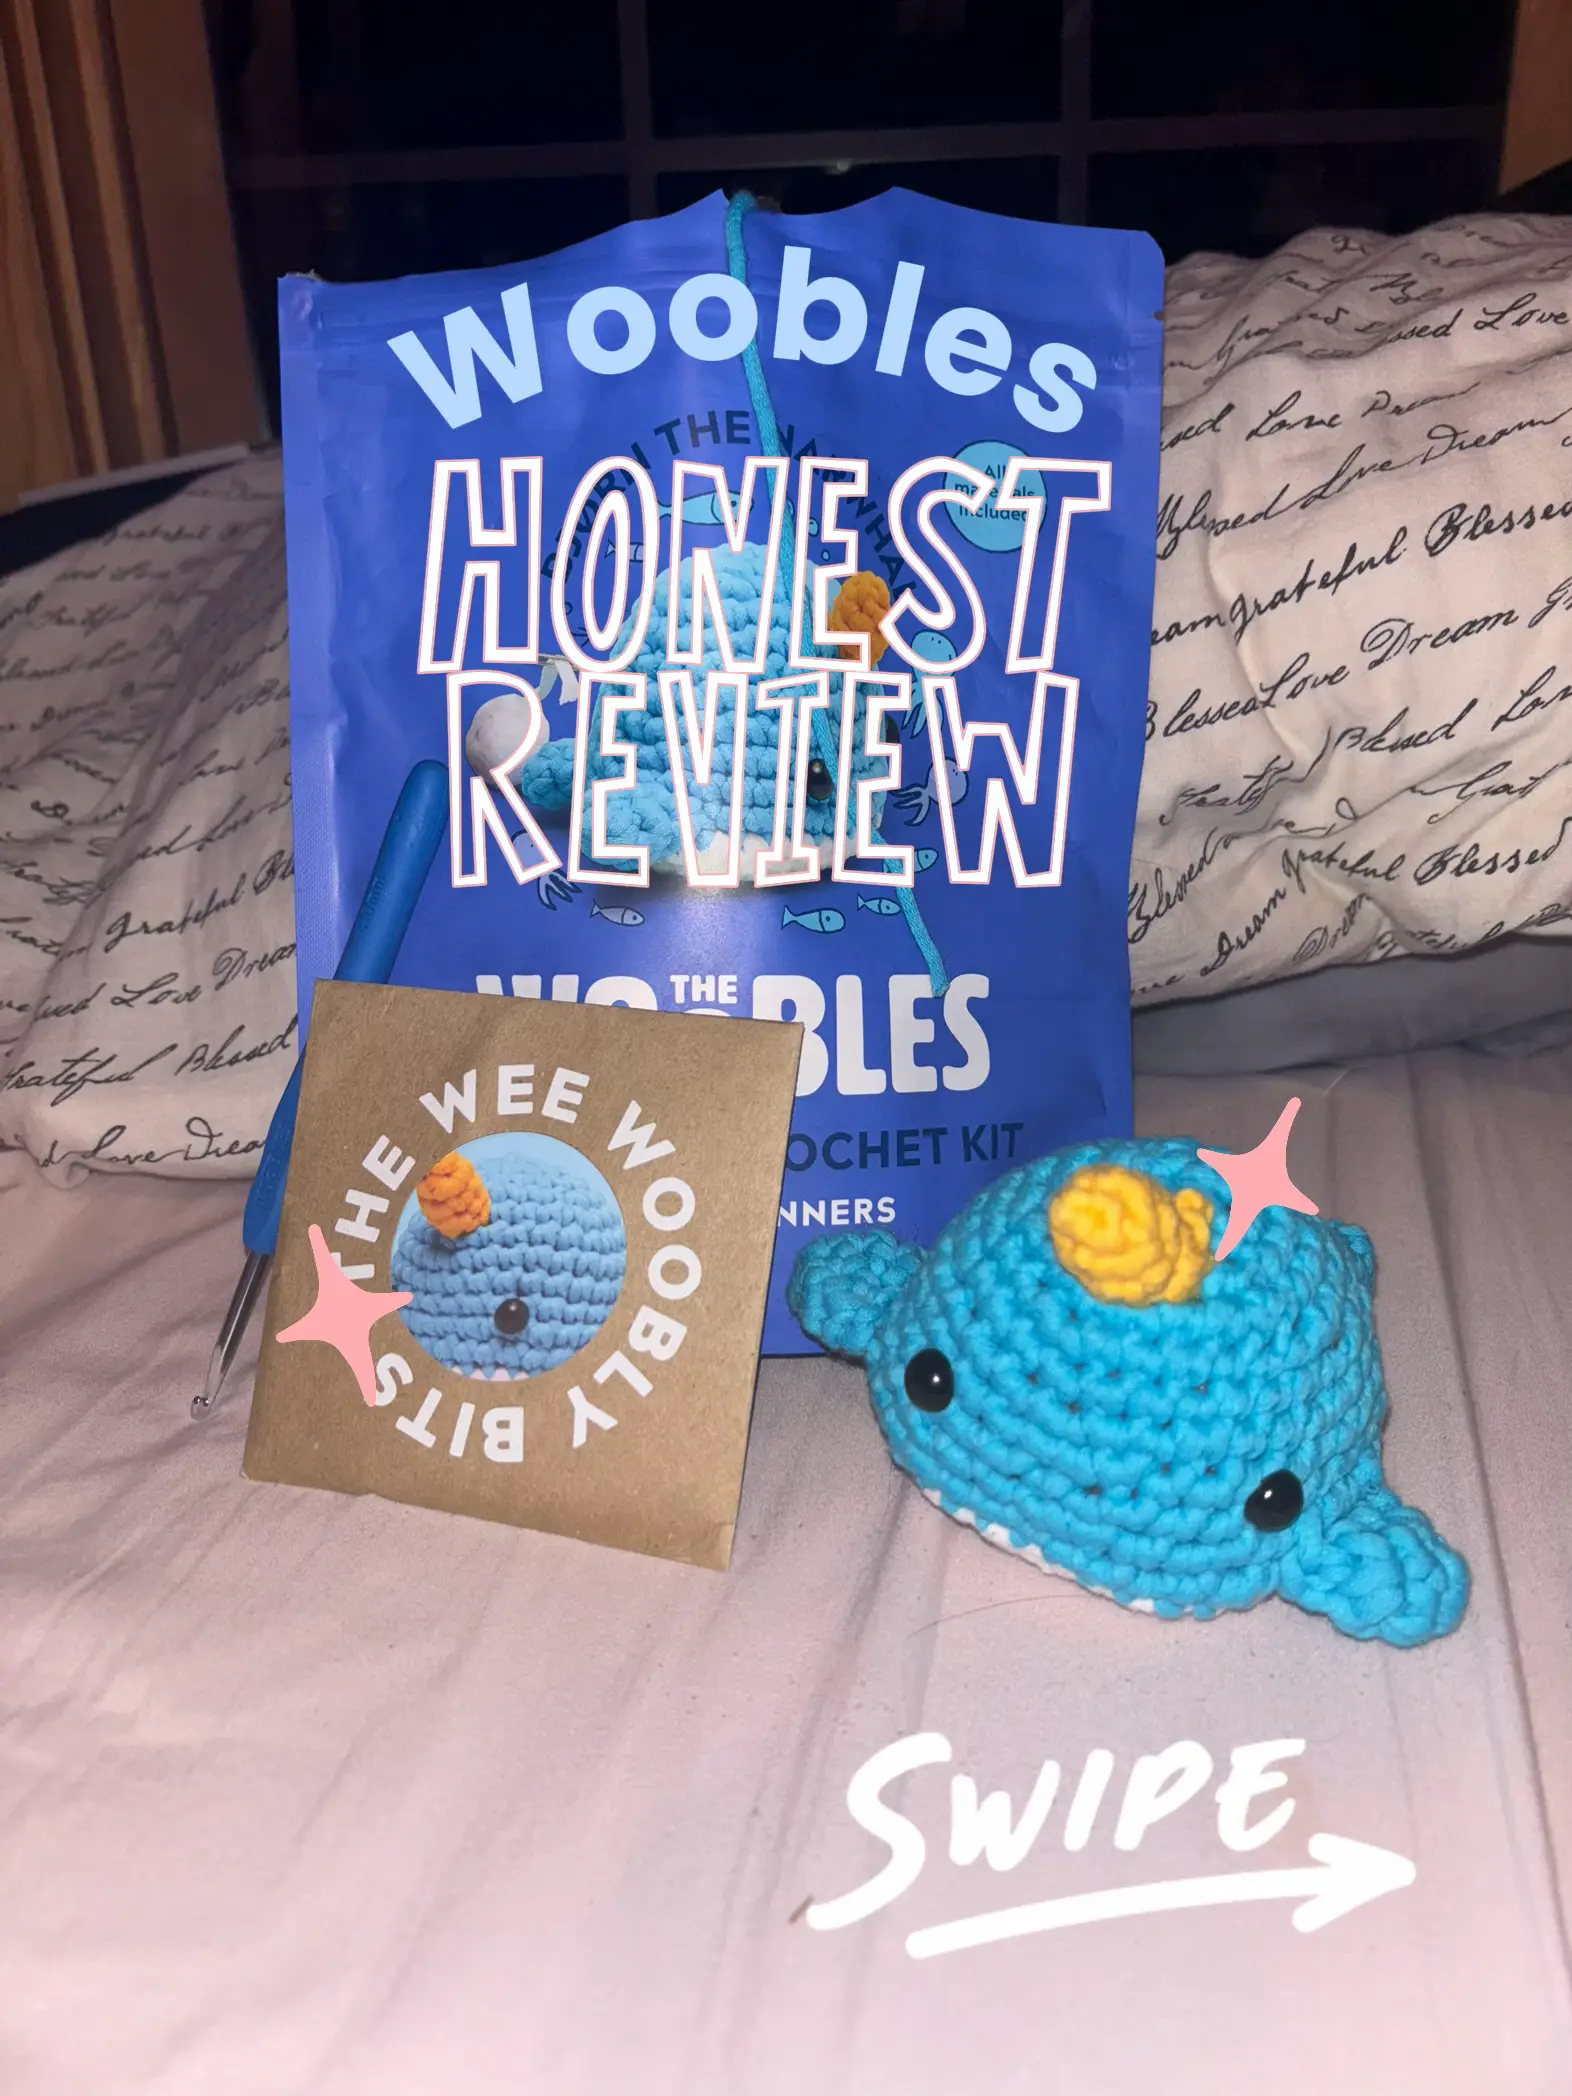 An Honest Review of the Woobles Crochet Kits - Sarah Maker